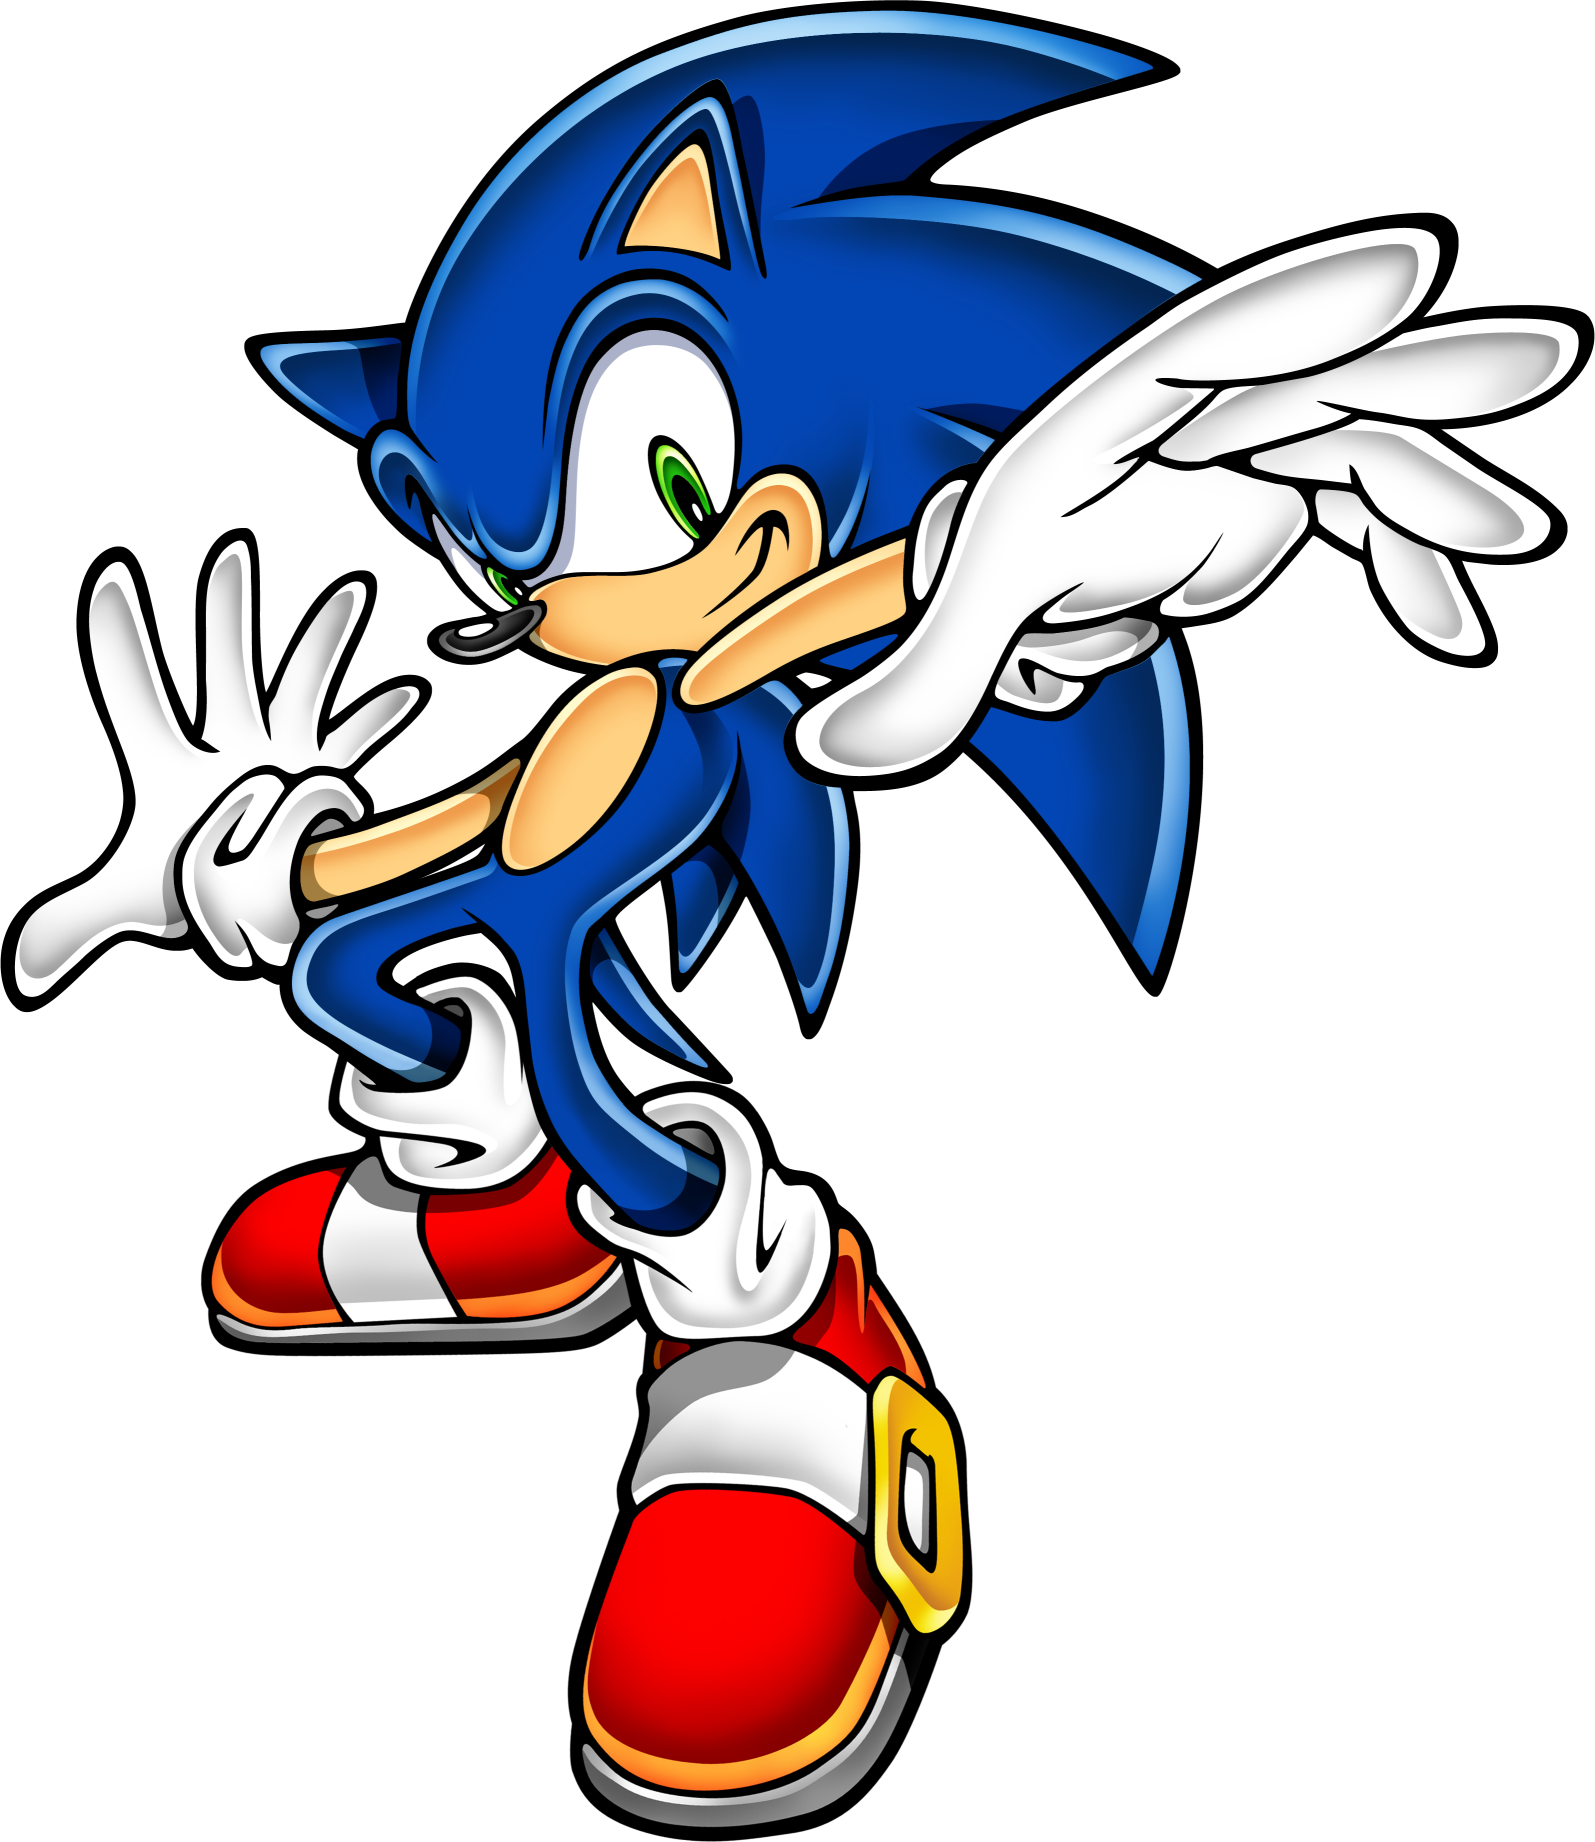 Sonic Art Assets Dvd   Sonic The Hedgehog   19.png - Hedgehog, Transparent background PNG HD thumbnail